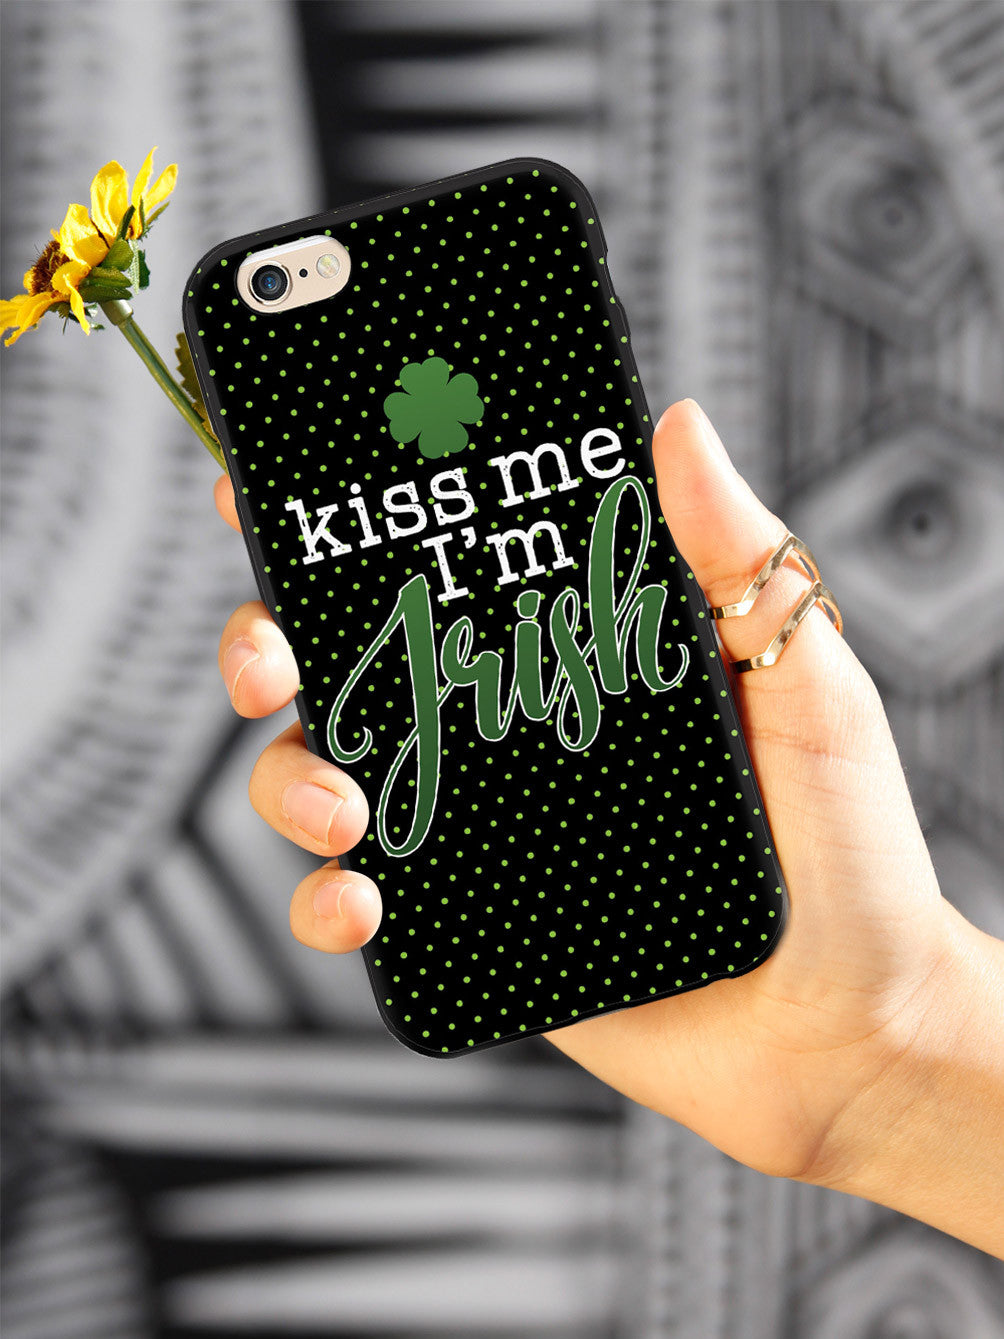 Kiss Me, I'm Irish - Polka Dots - Black Case